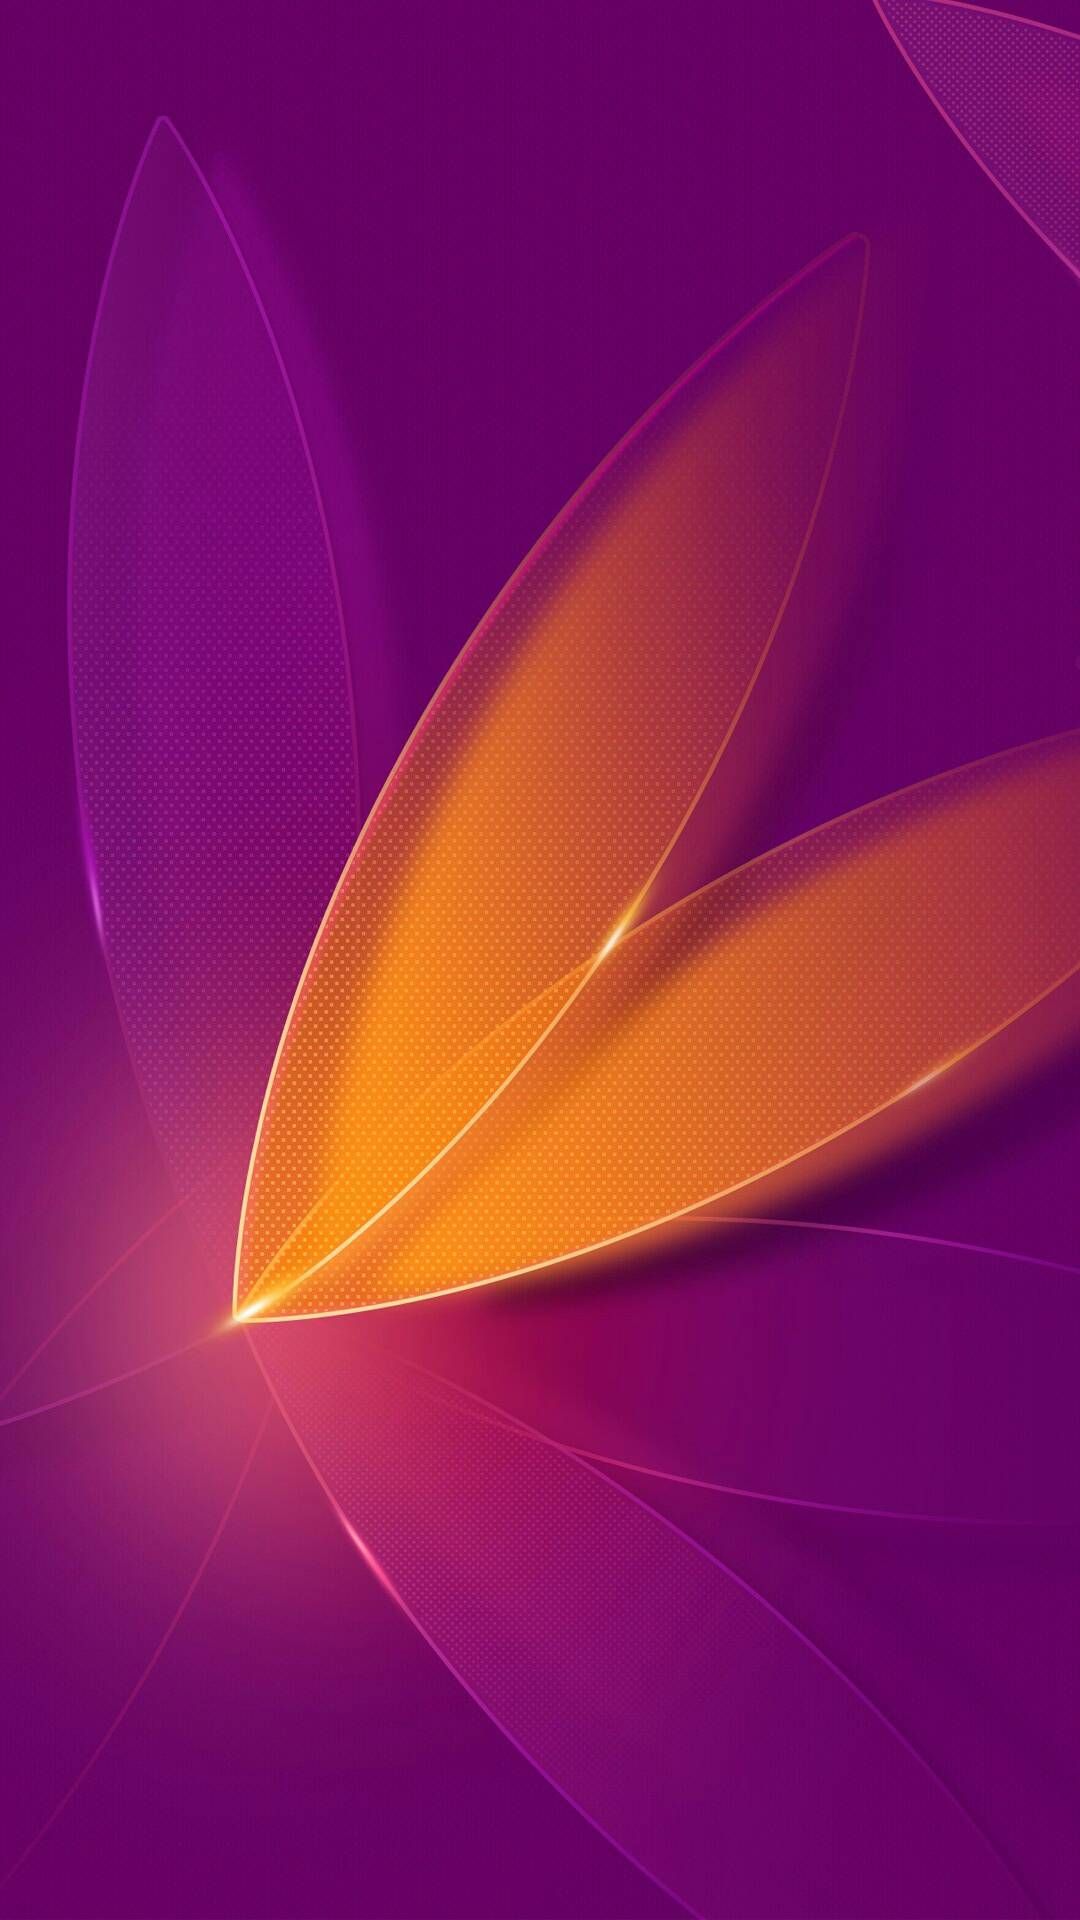 bunte tapete,violett,lila,orange,linie,design